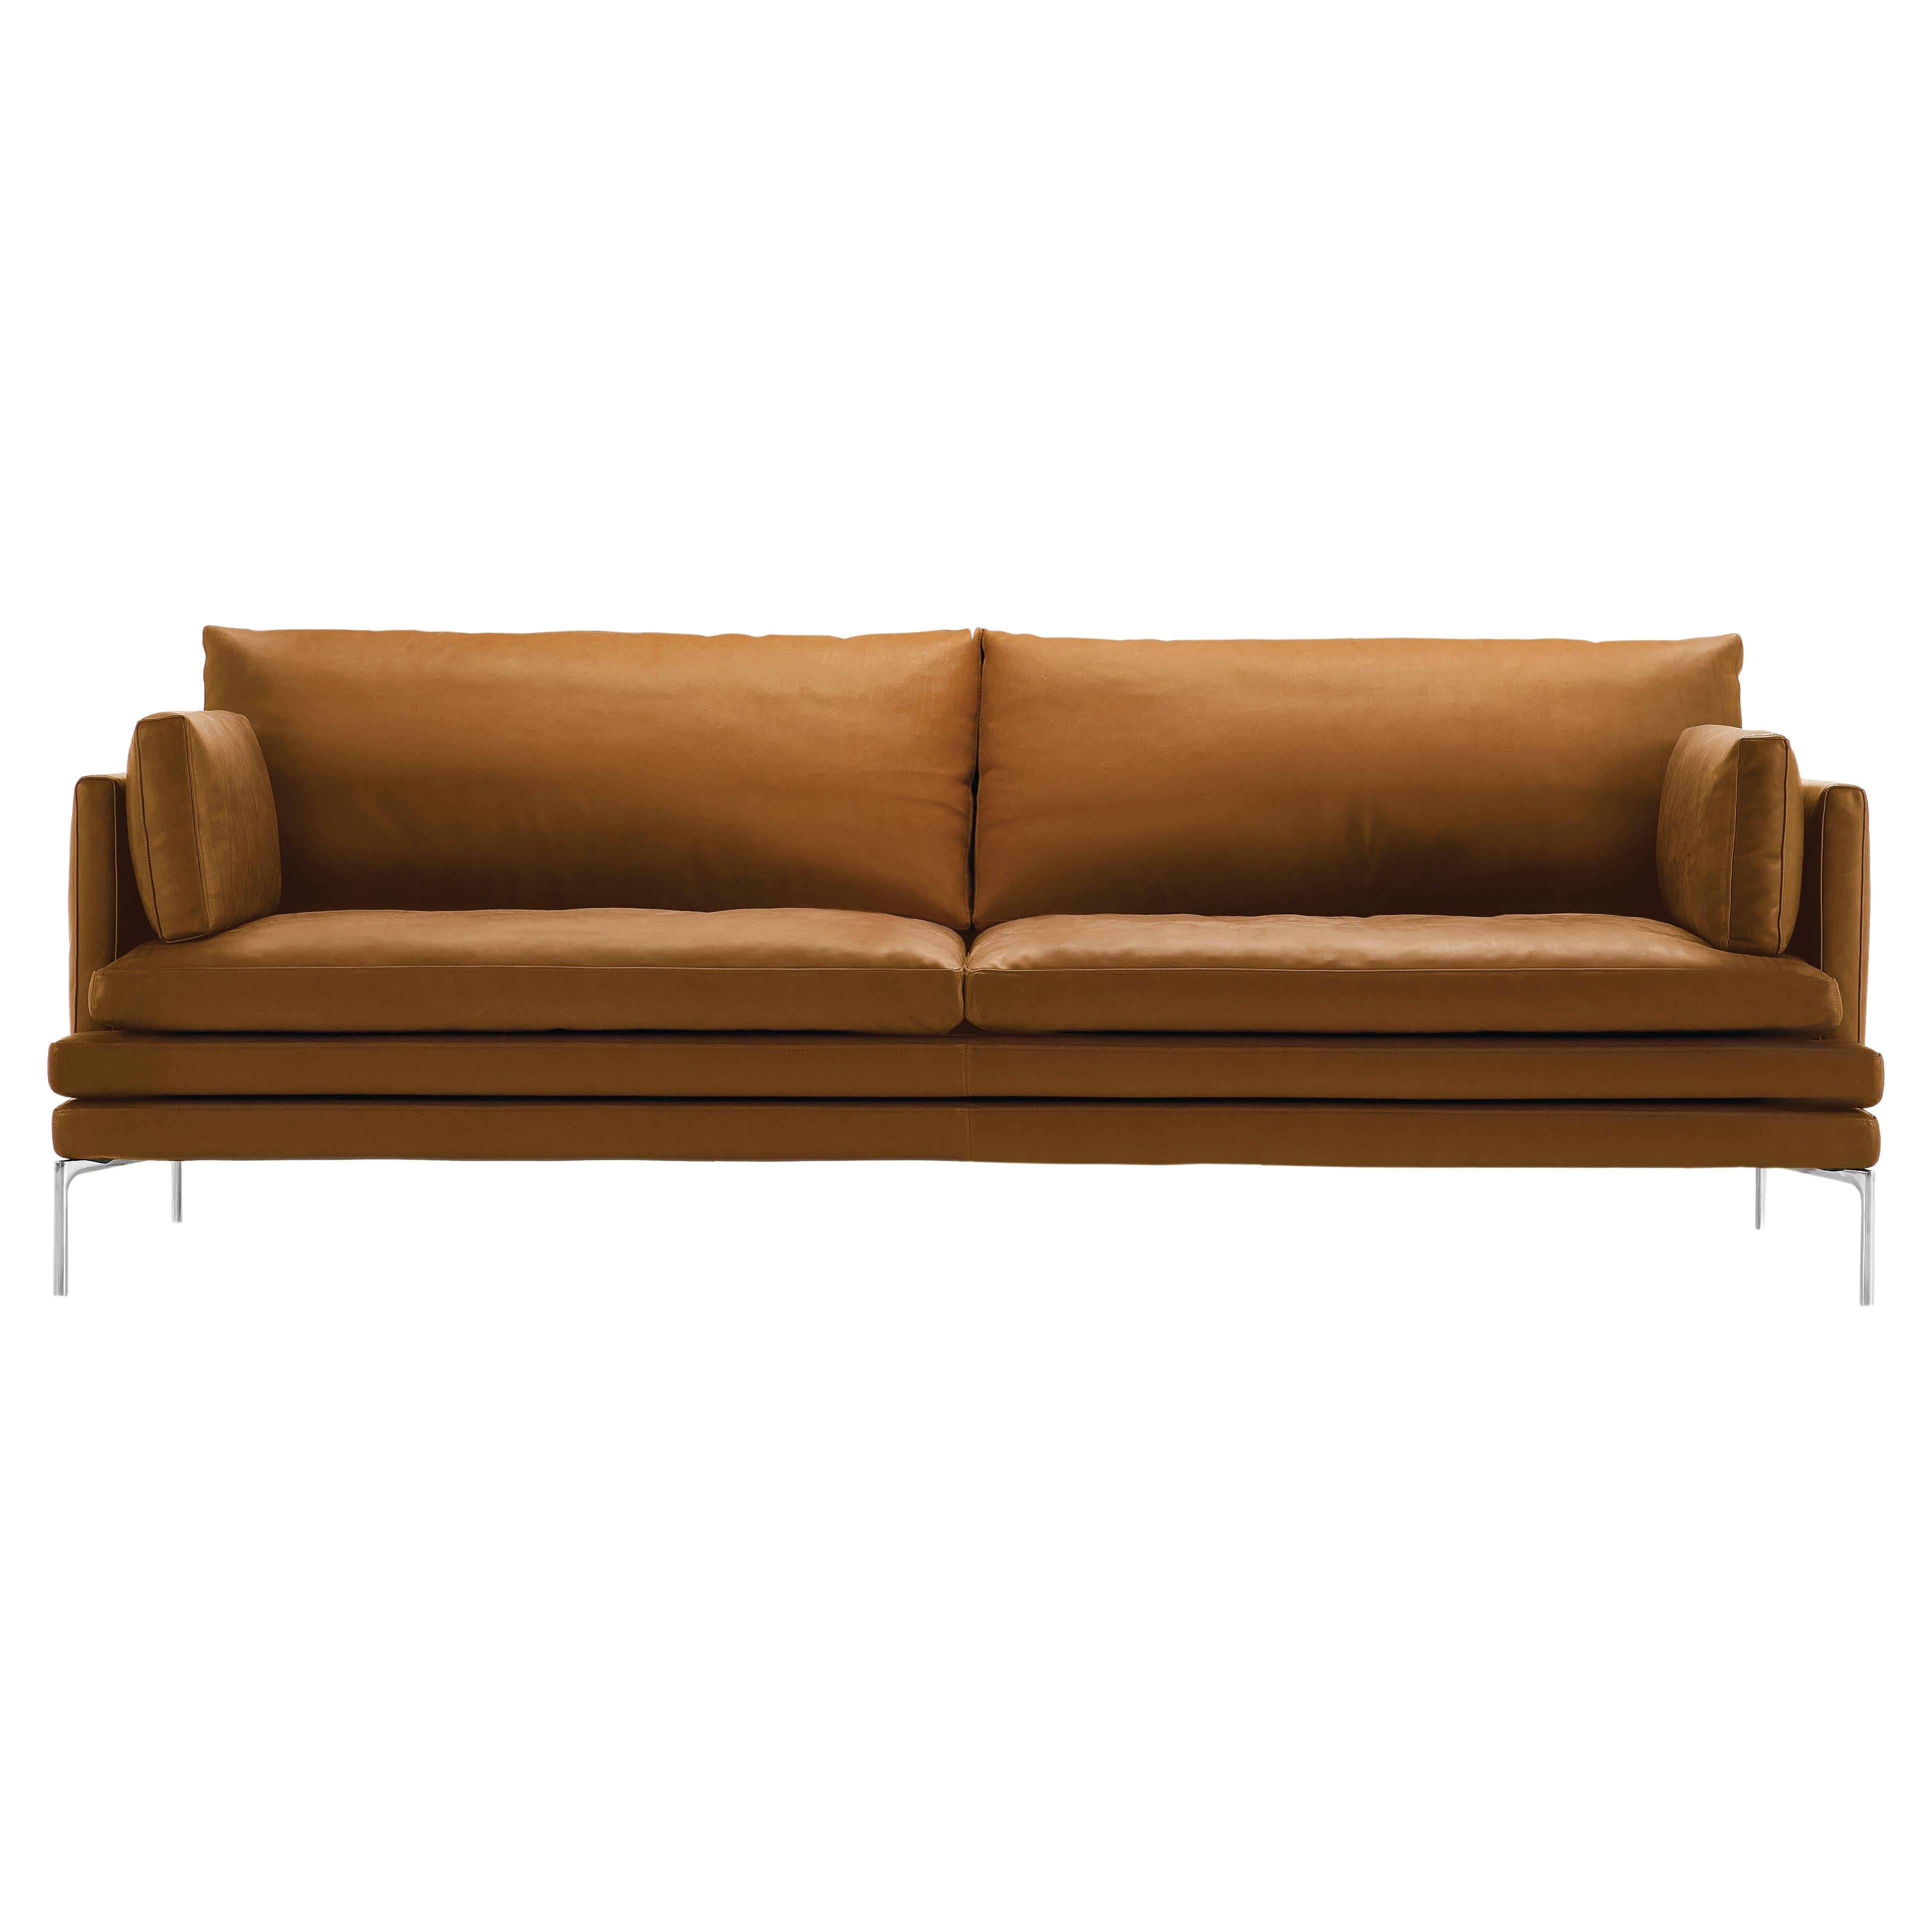 Zanotta William Monobloc Large Sofa in Brown Leather by Damian Williamson For Sale